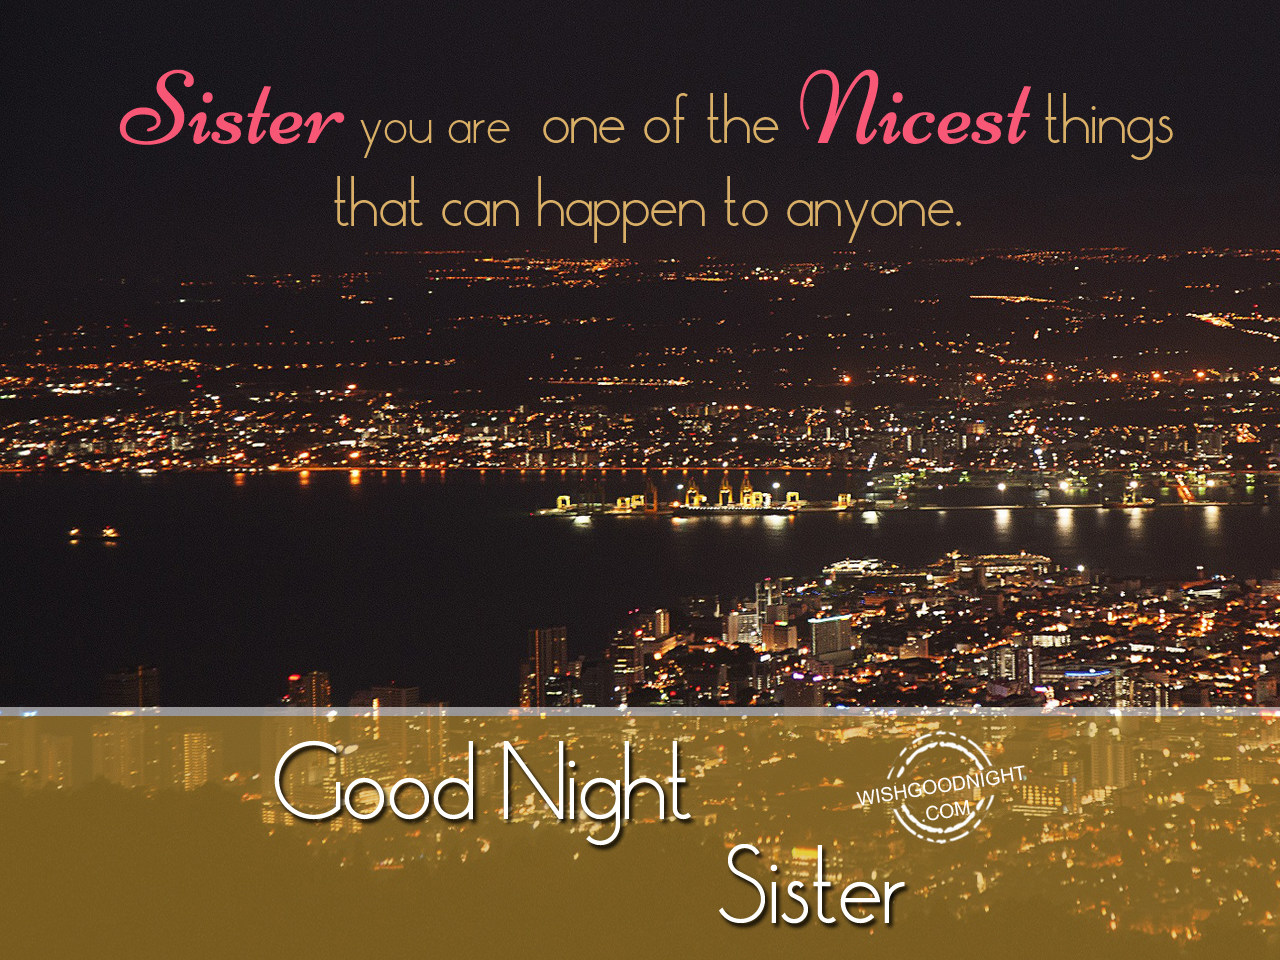 Sister of night